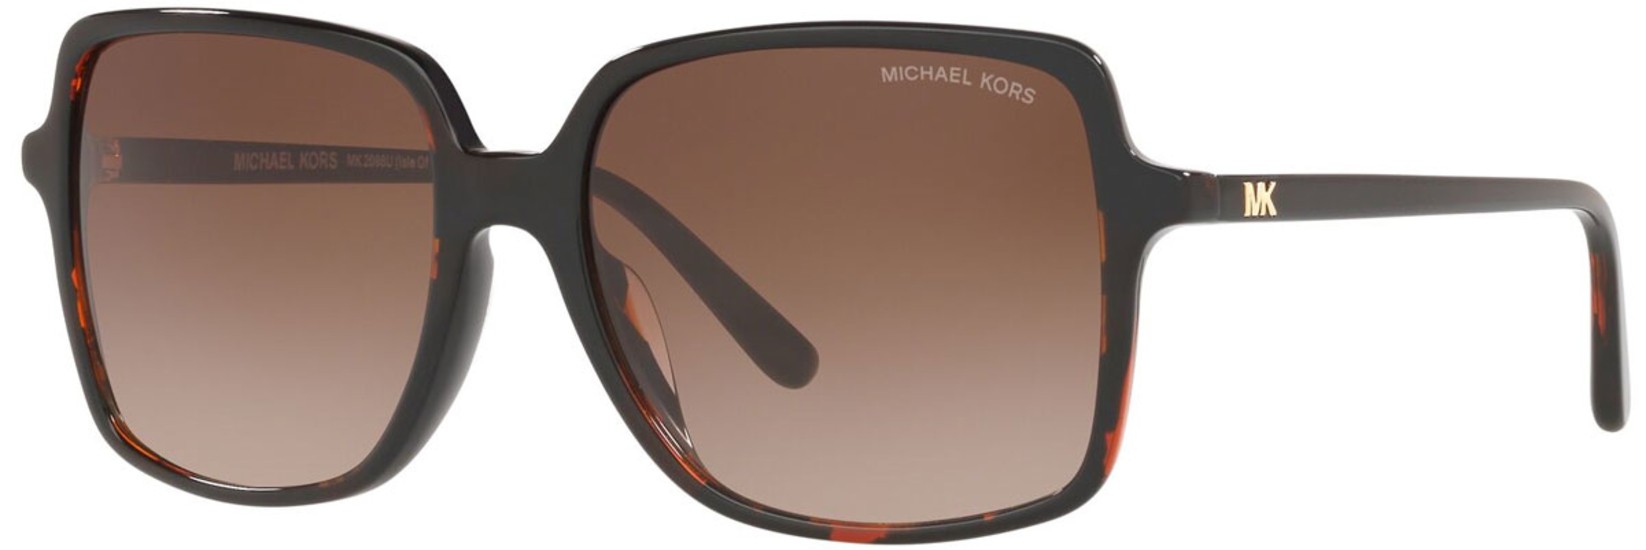 Michael Kors IsleOfPalms MK2098U Womens Sunglasses Fashion Square   EyeSpecscom